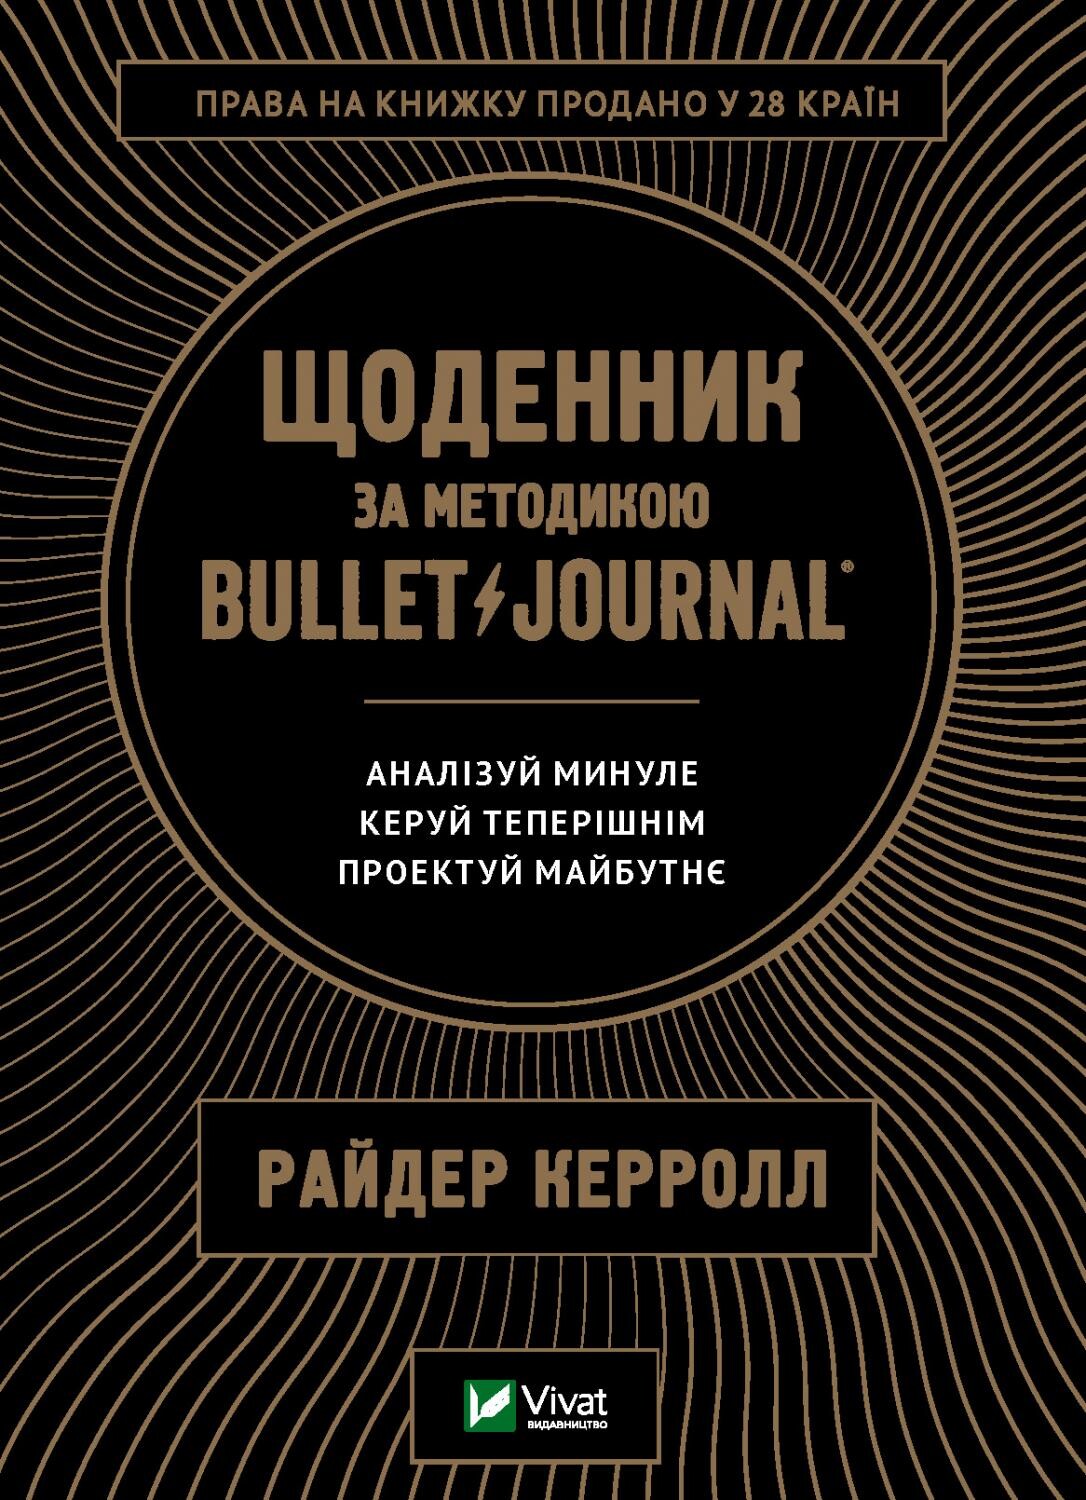 Щоденник за методикою Bullet Journal - Vivat